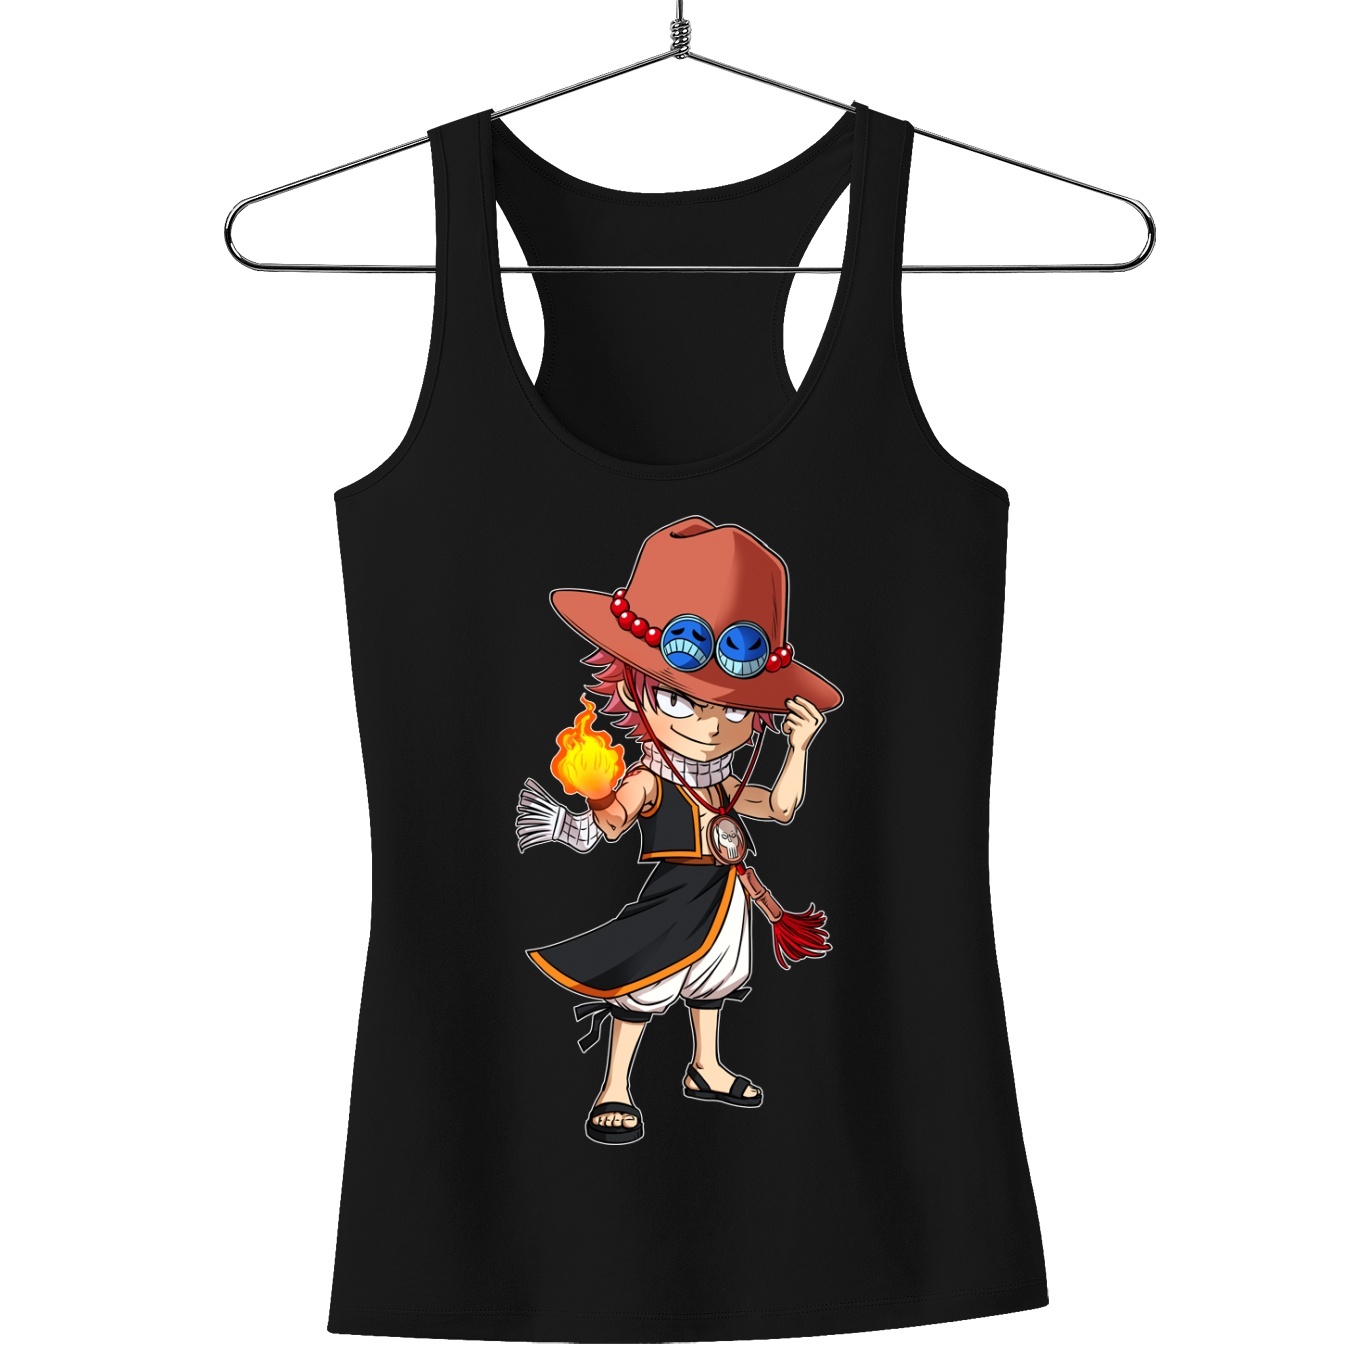 Camiseta One Piece - Portgas D. Ace